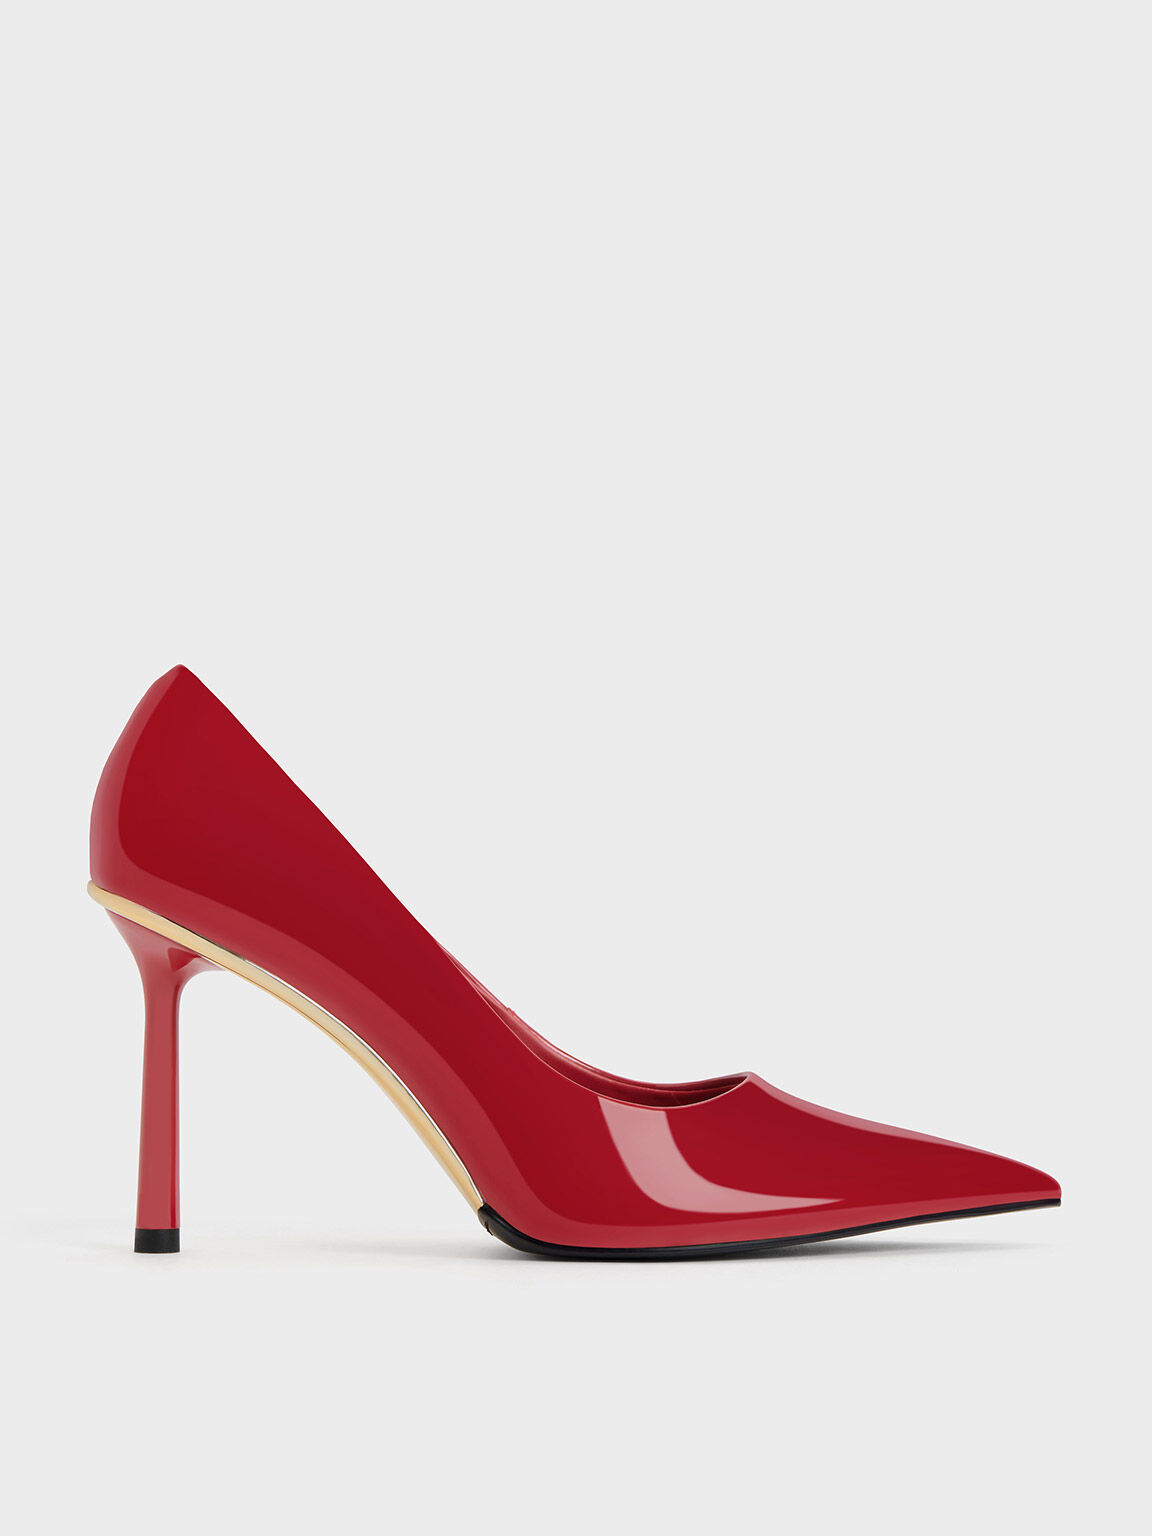 Rhinestone Classic Pointy Pumps | Stiletto heels, Red high heel shoes, Heels